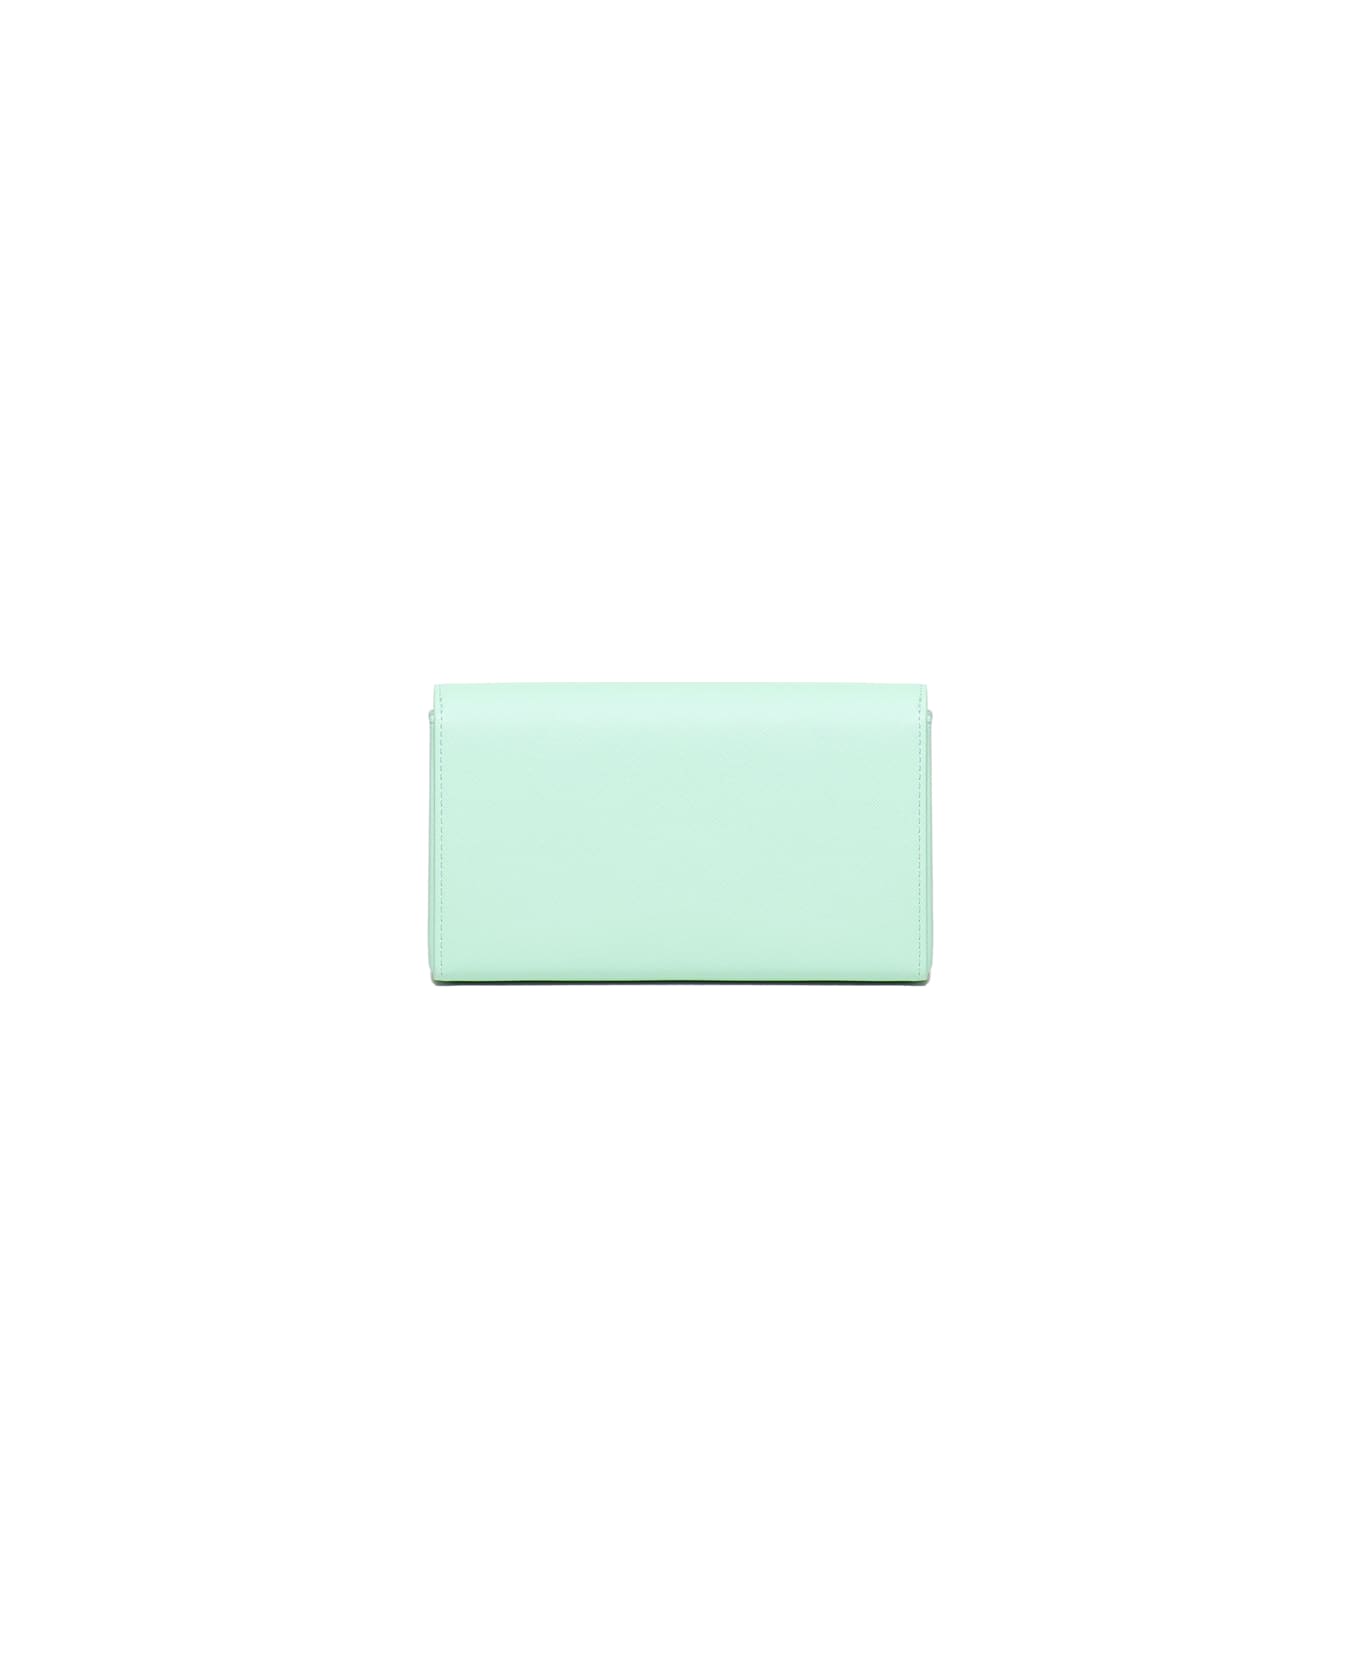 Love Moschino Smart Daily Shoulder Bag - Mint ショルダーバッグ